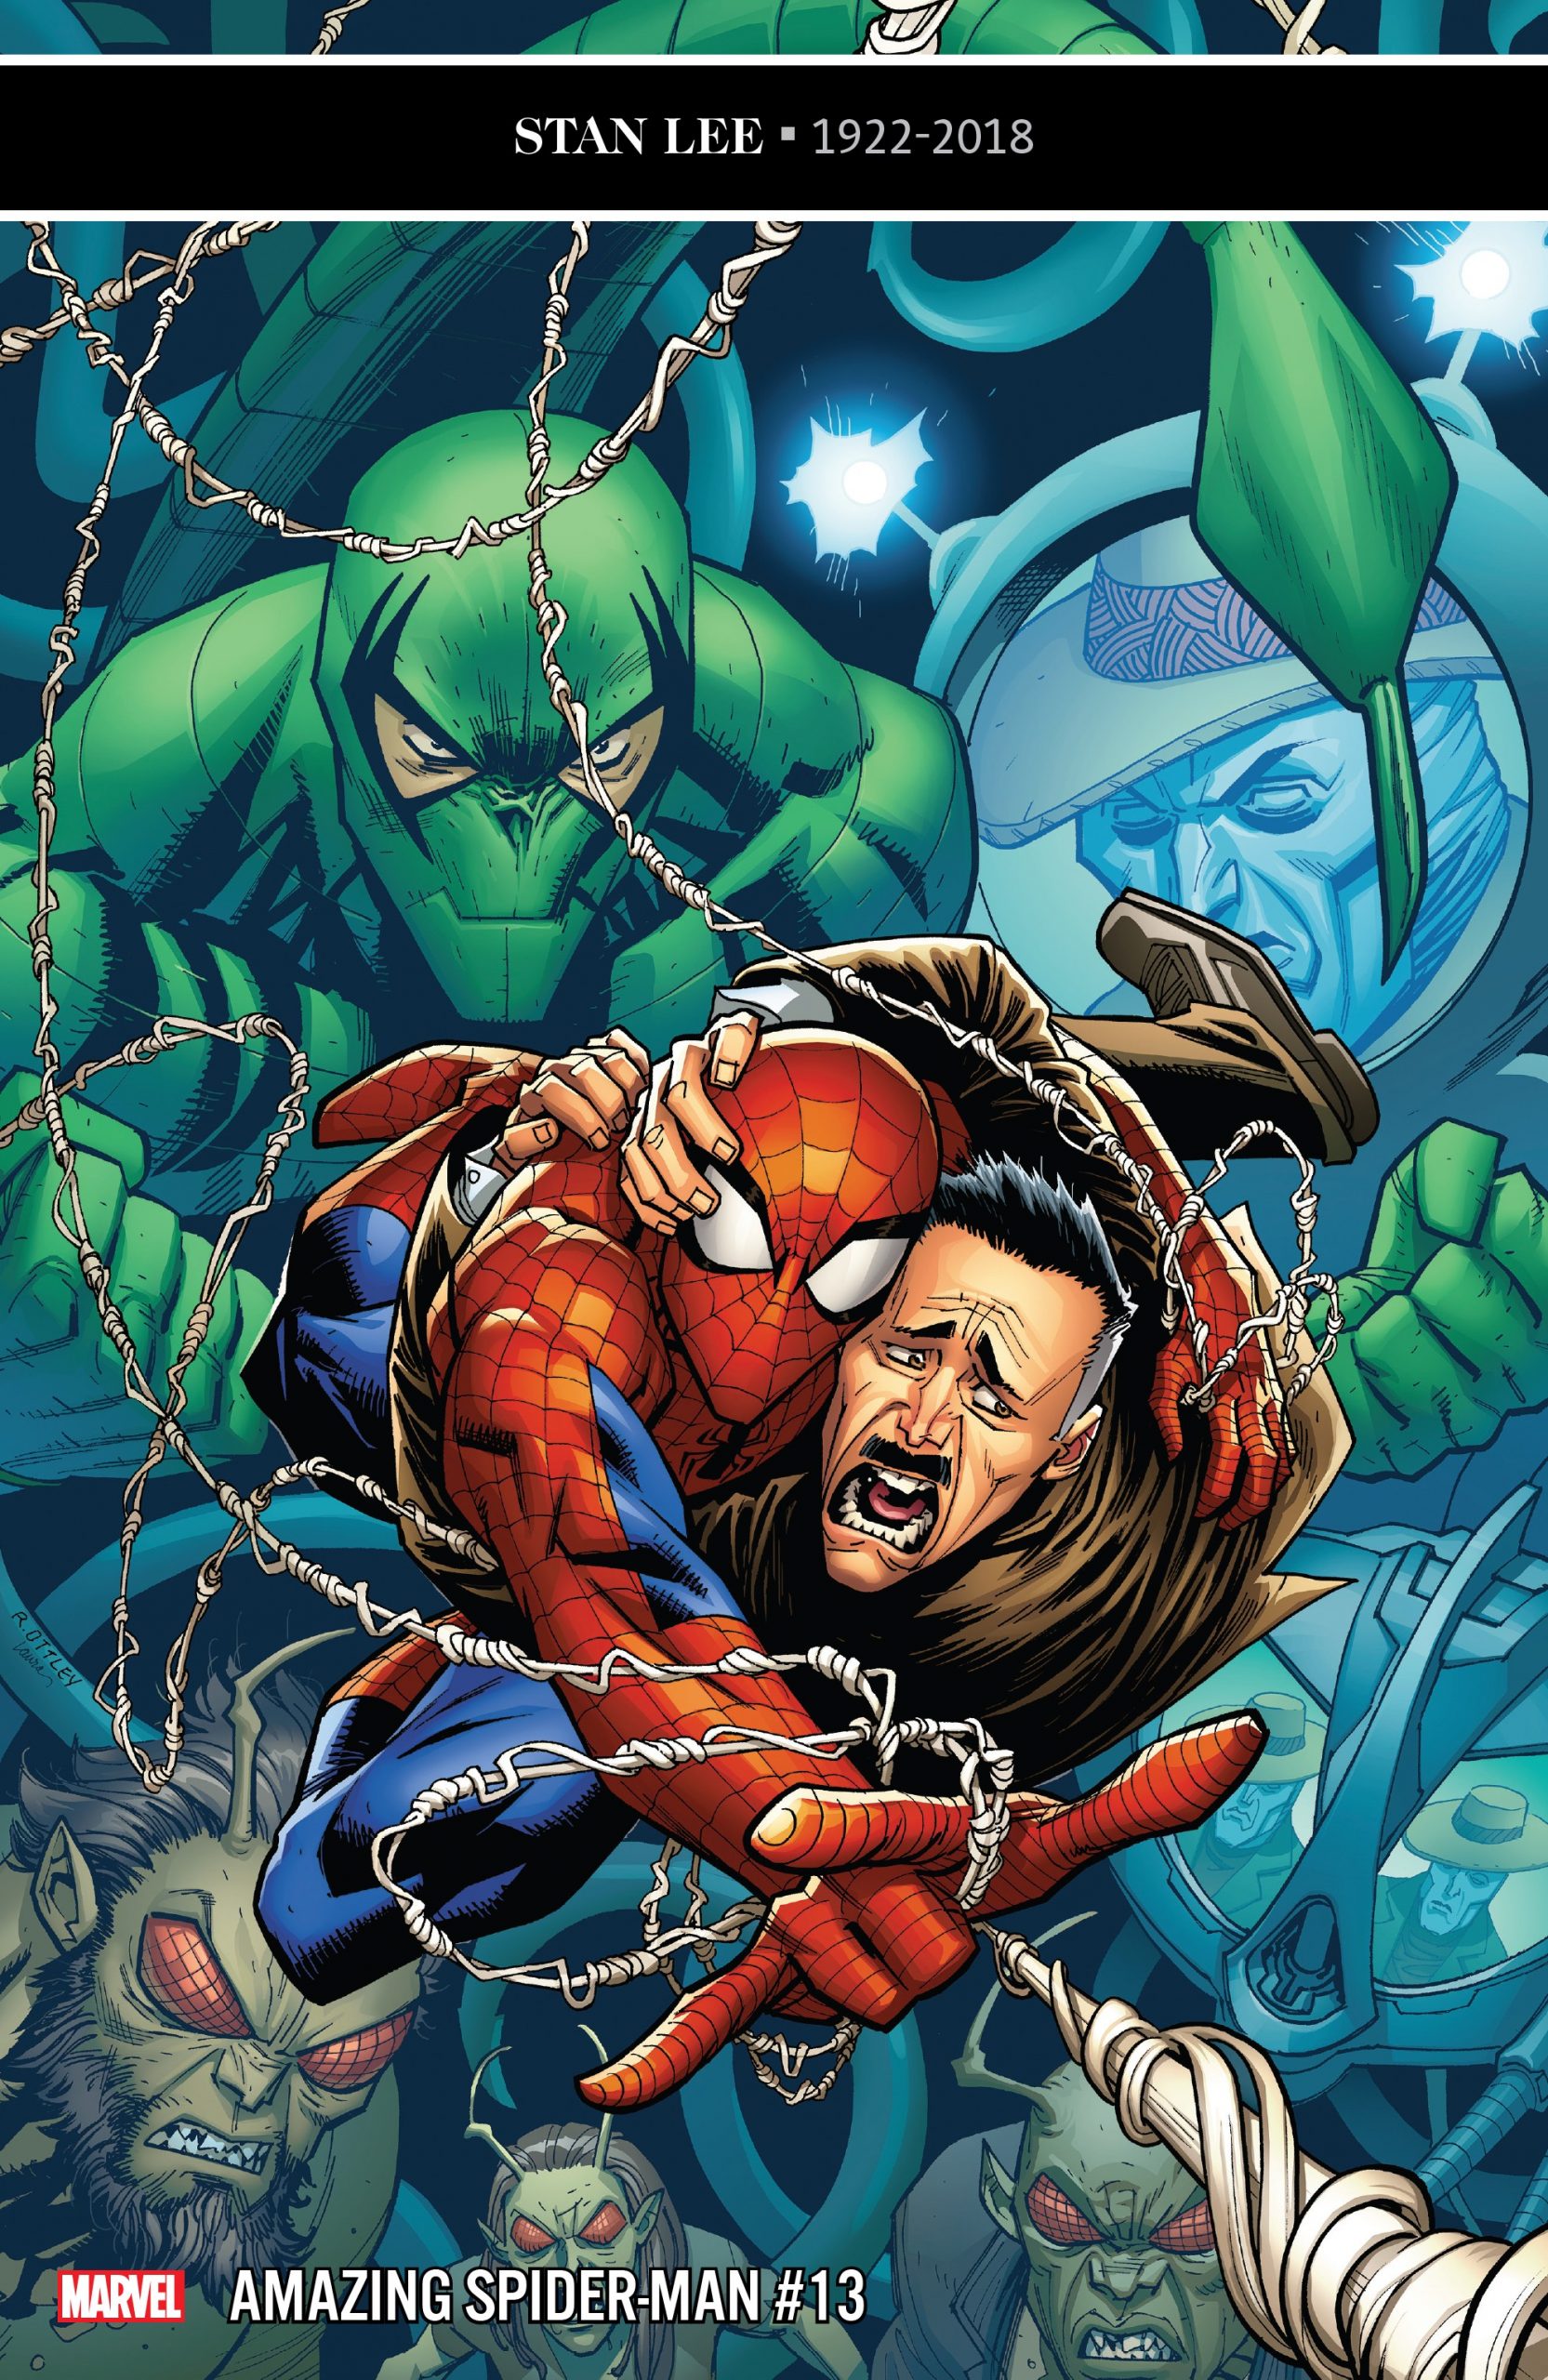 https://langgeek.net/wp-content/webpc-passthru.php?src=https://langgeek.net/wp-content/uploads/2021/12/Amazing-Spider-Man-013-000-scaled.jpg&nocache=1